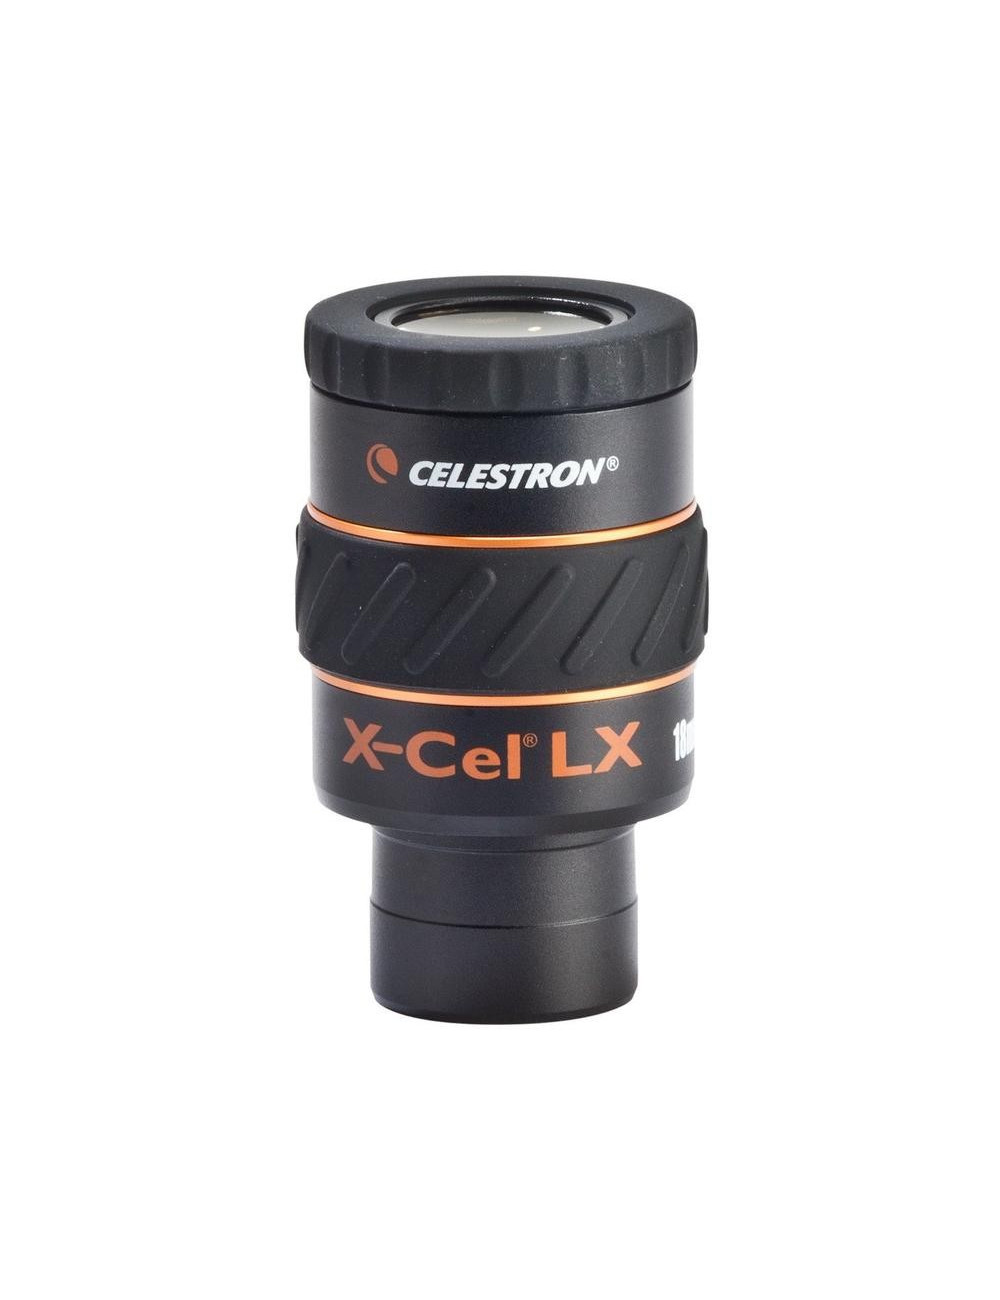 Oculaires XCel Celestron 31.75mm